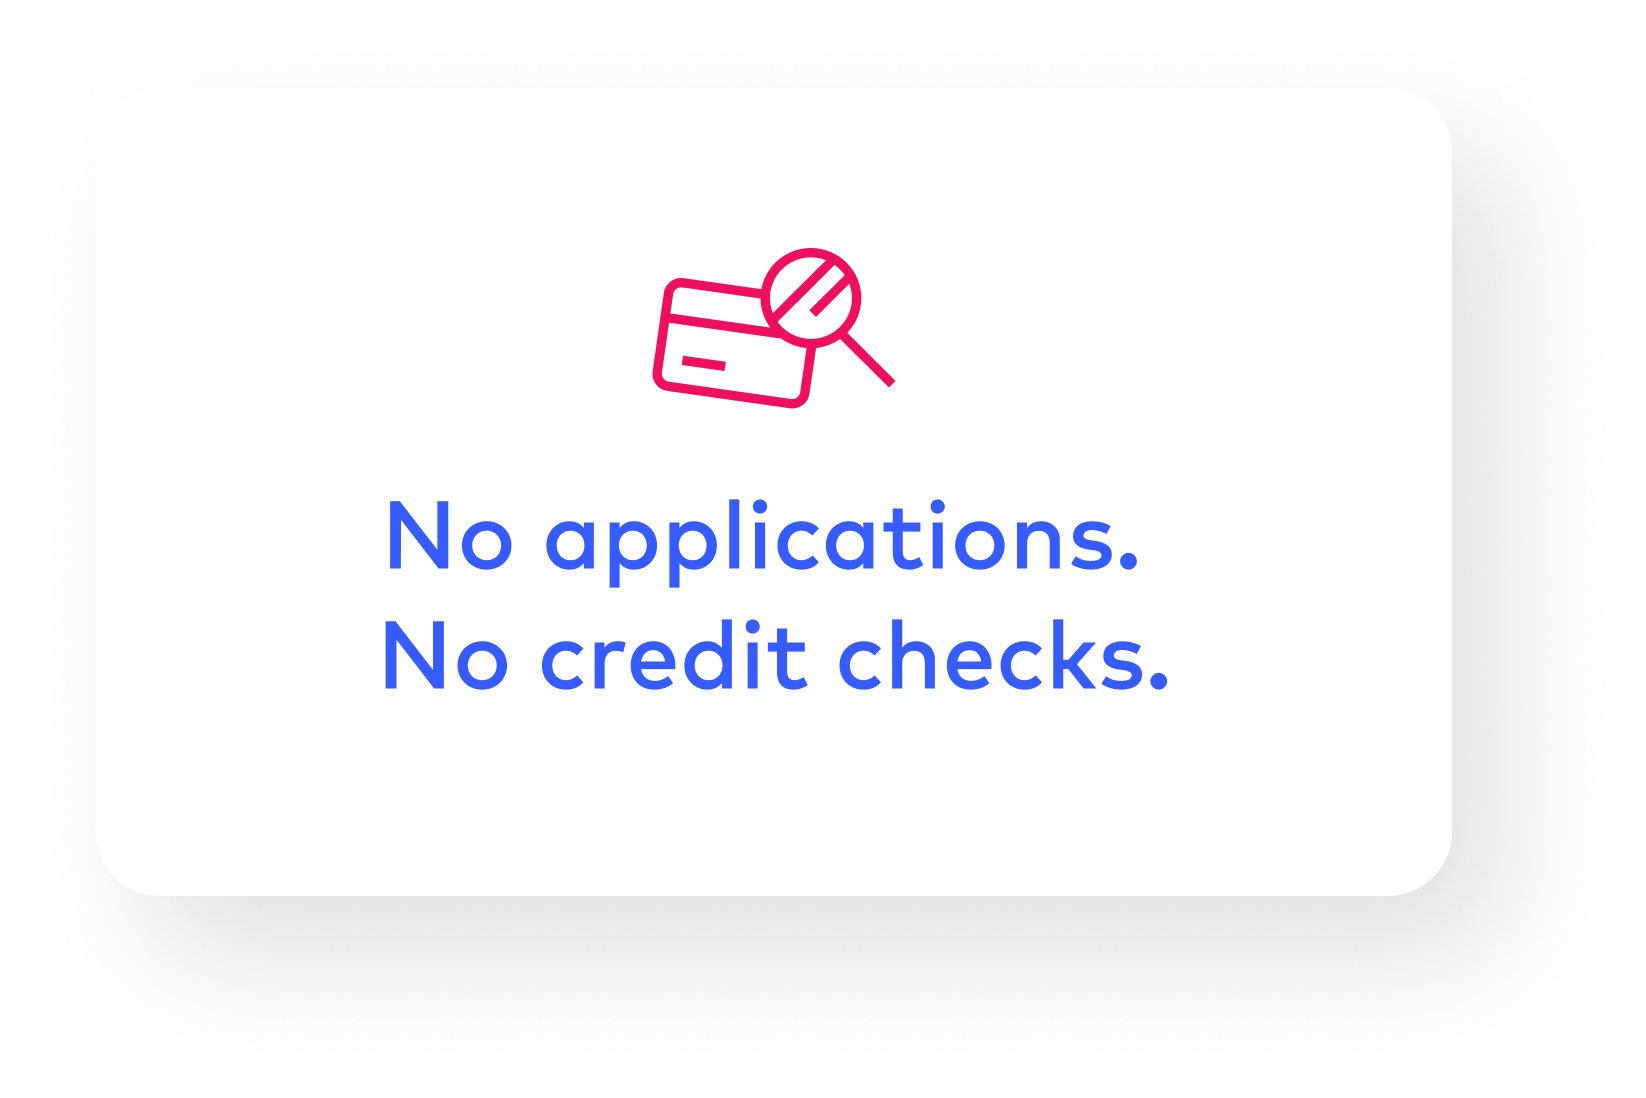 No application. No credit checks